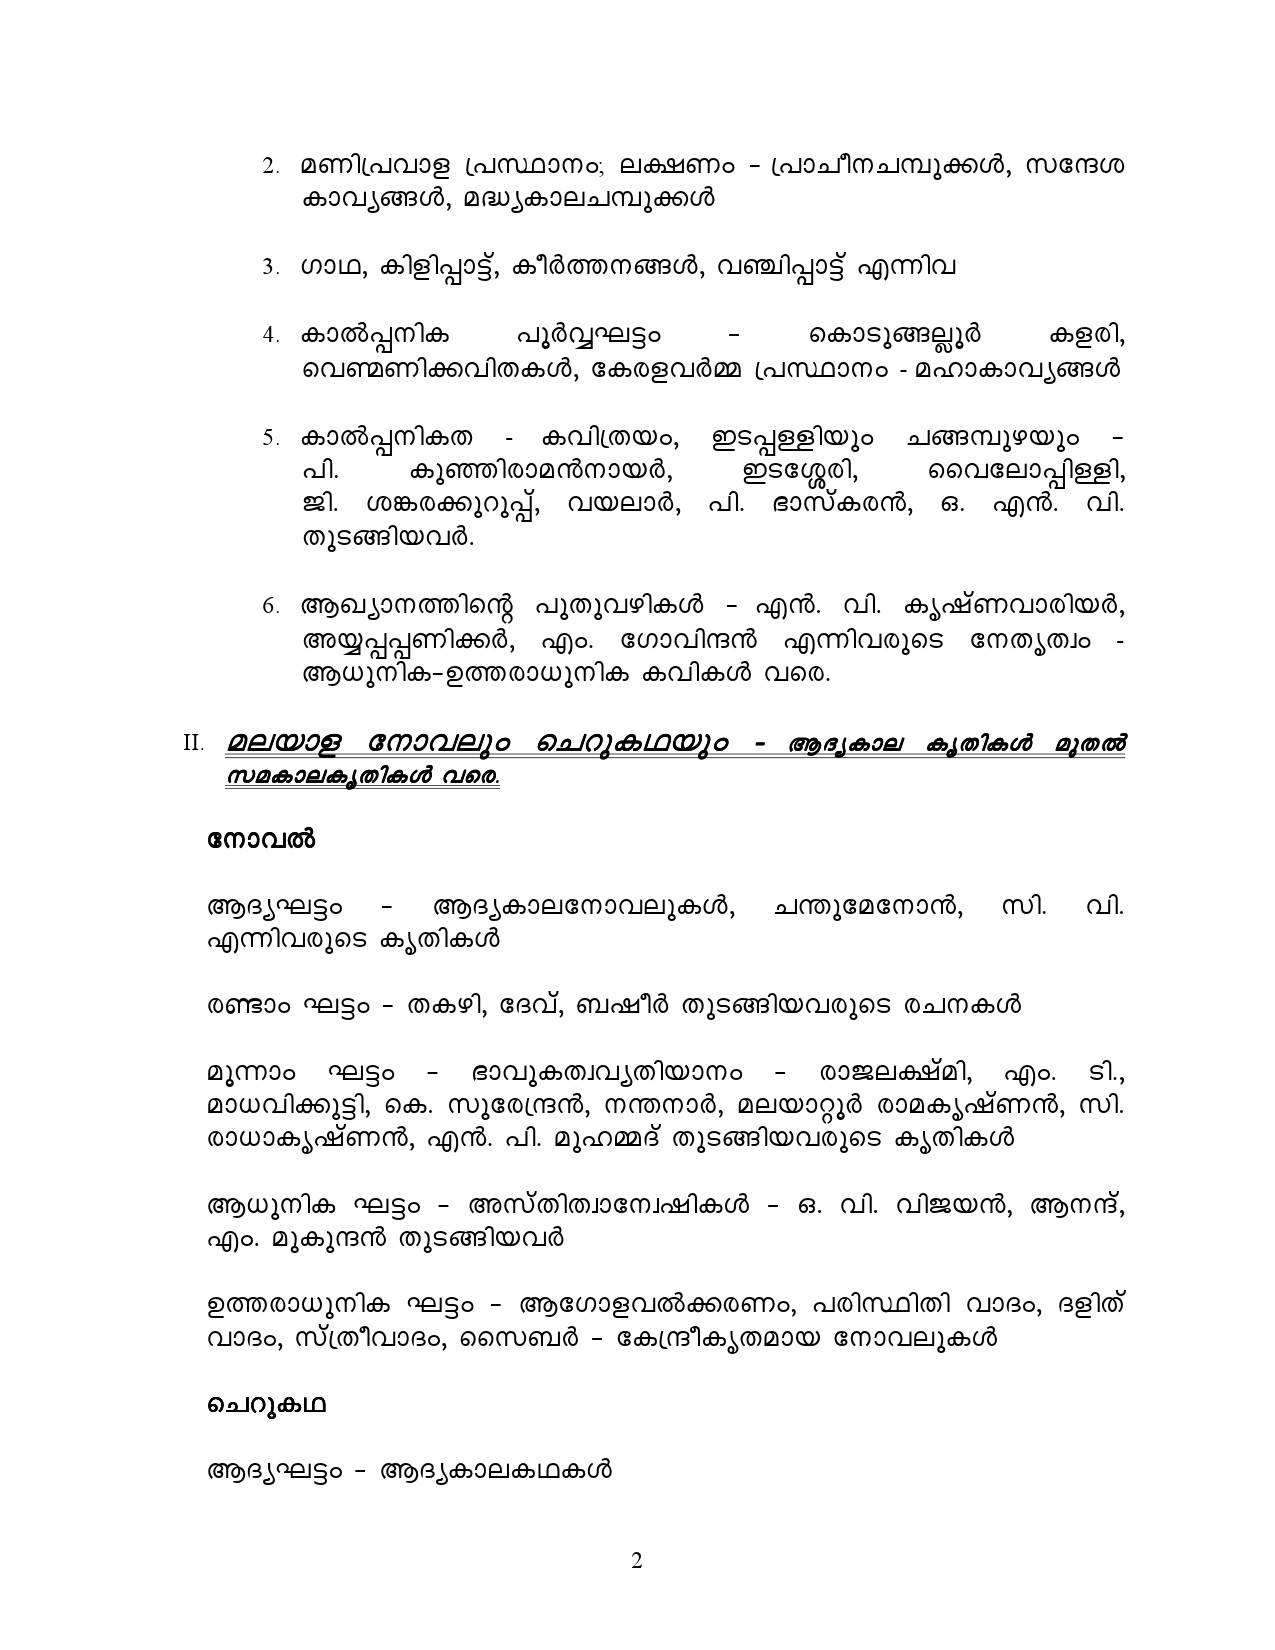 High School Assistant Malayalam Part A Kerala Examination Syllabus 2021 - Notification Image 2